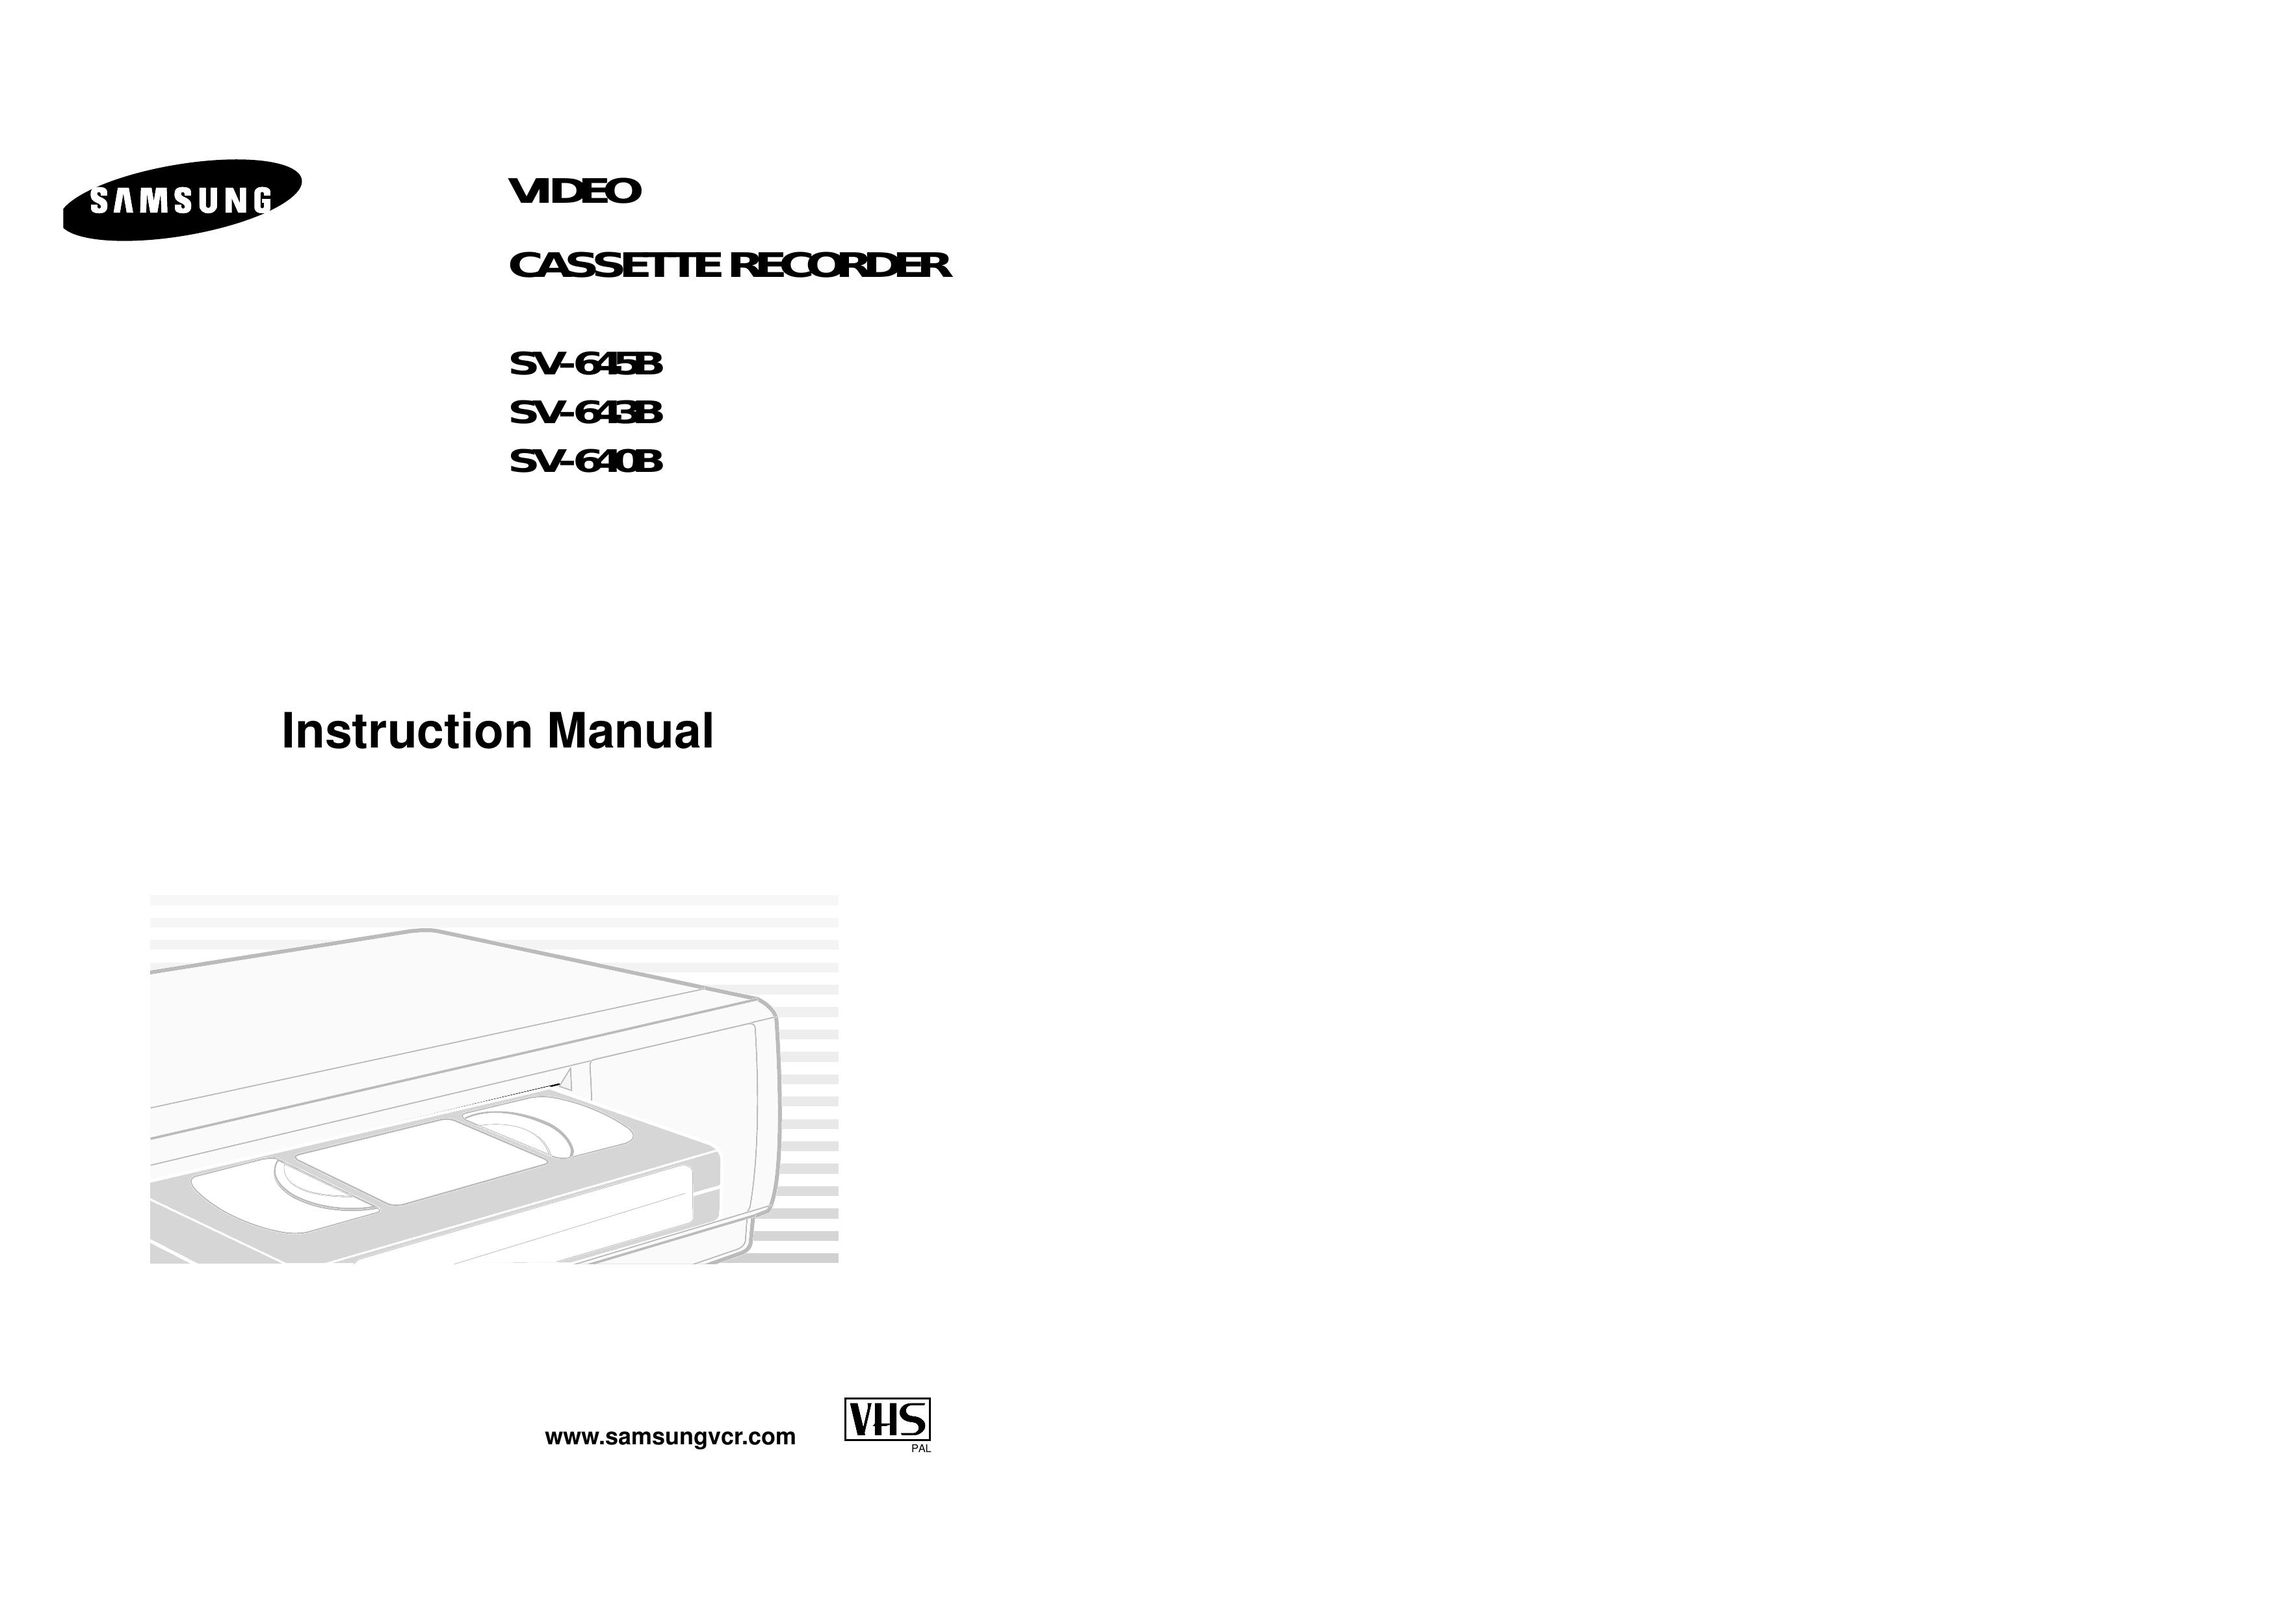 Samsung SV-643B VCR User Manual